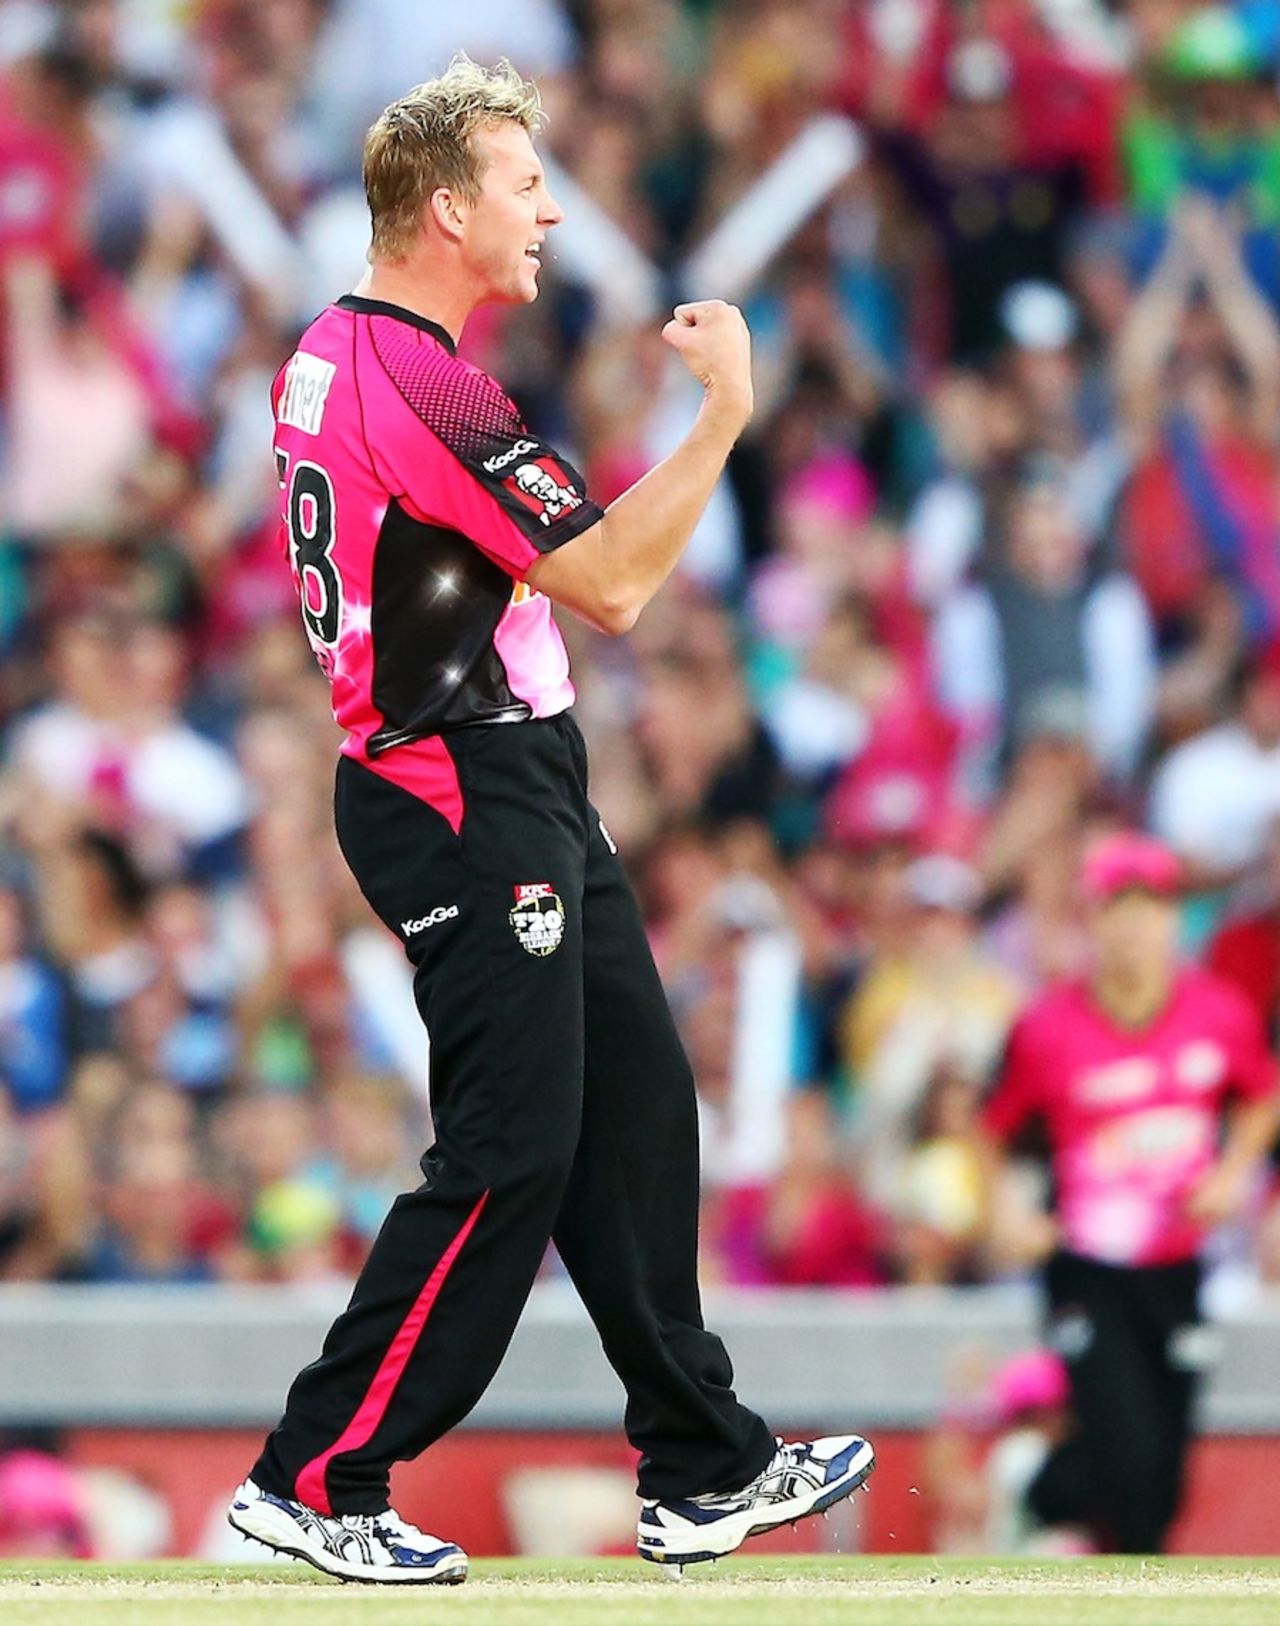 Brett Lee celebrates one of his four wickets, Sydney Sixers v Perth Scorchers, Big Bash League, Sydney, January 10, 2014 